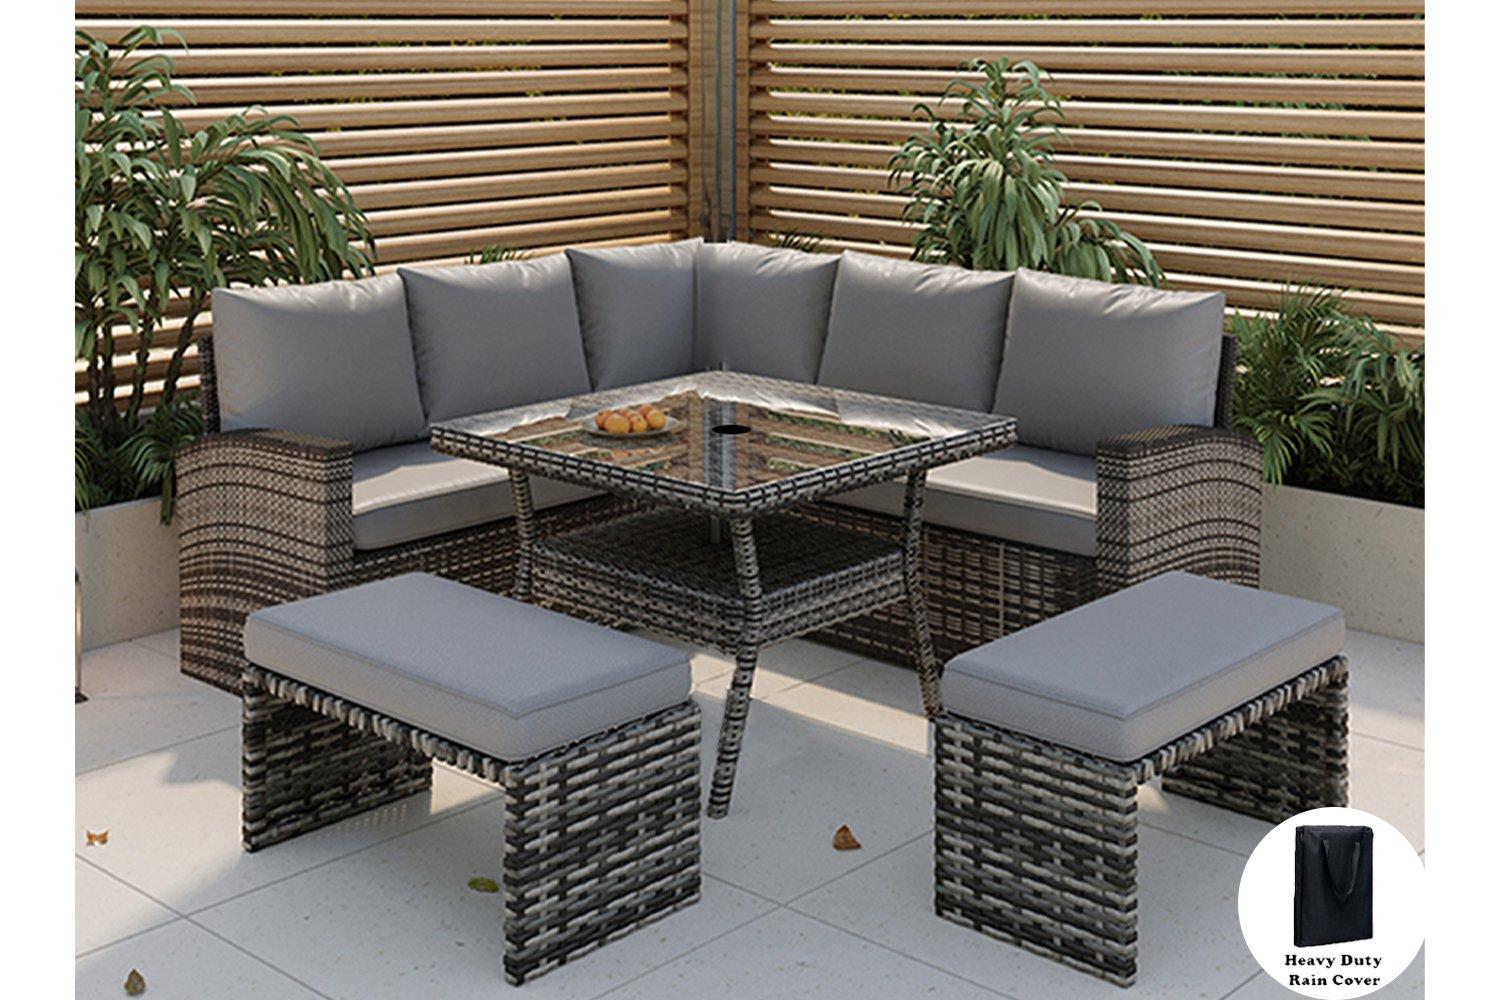 Rosen 9 Seater Rattan Garden Furniture Cube Dining Set With Rain Cover